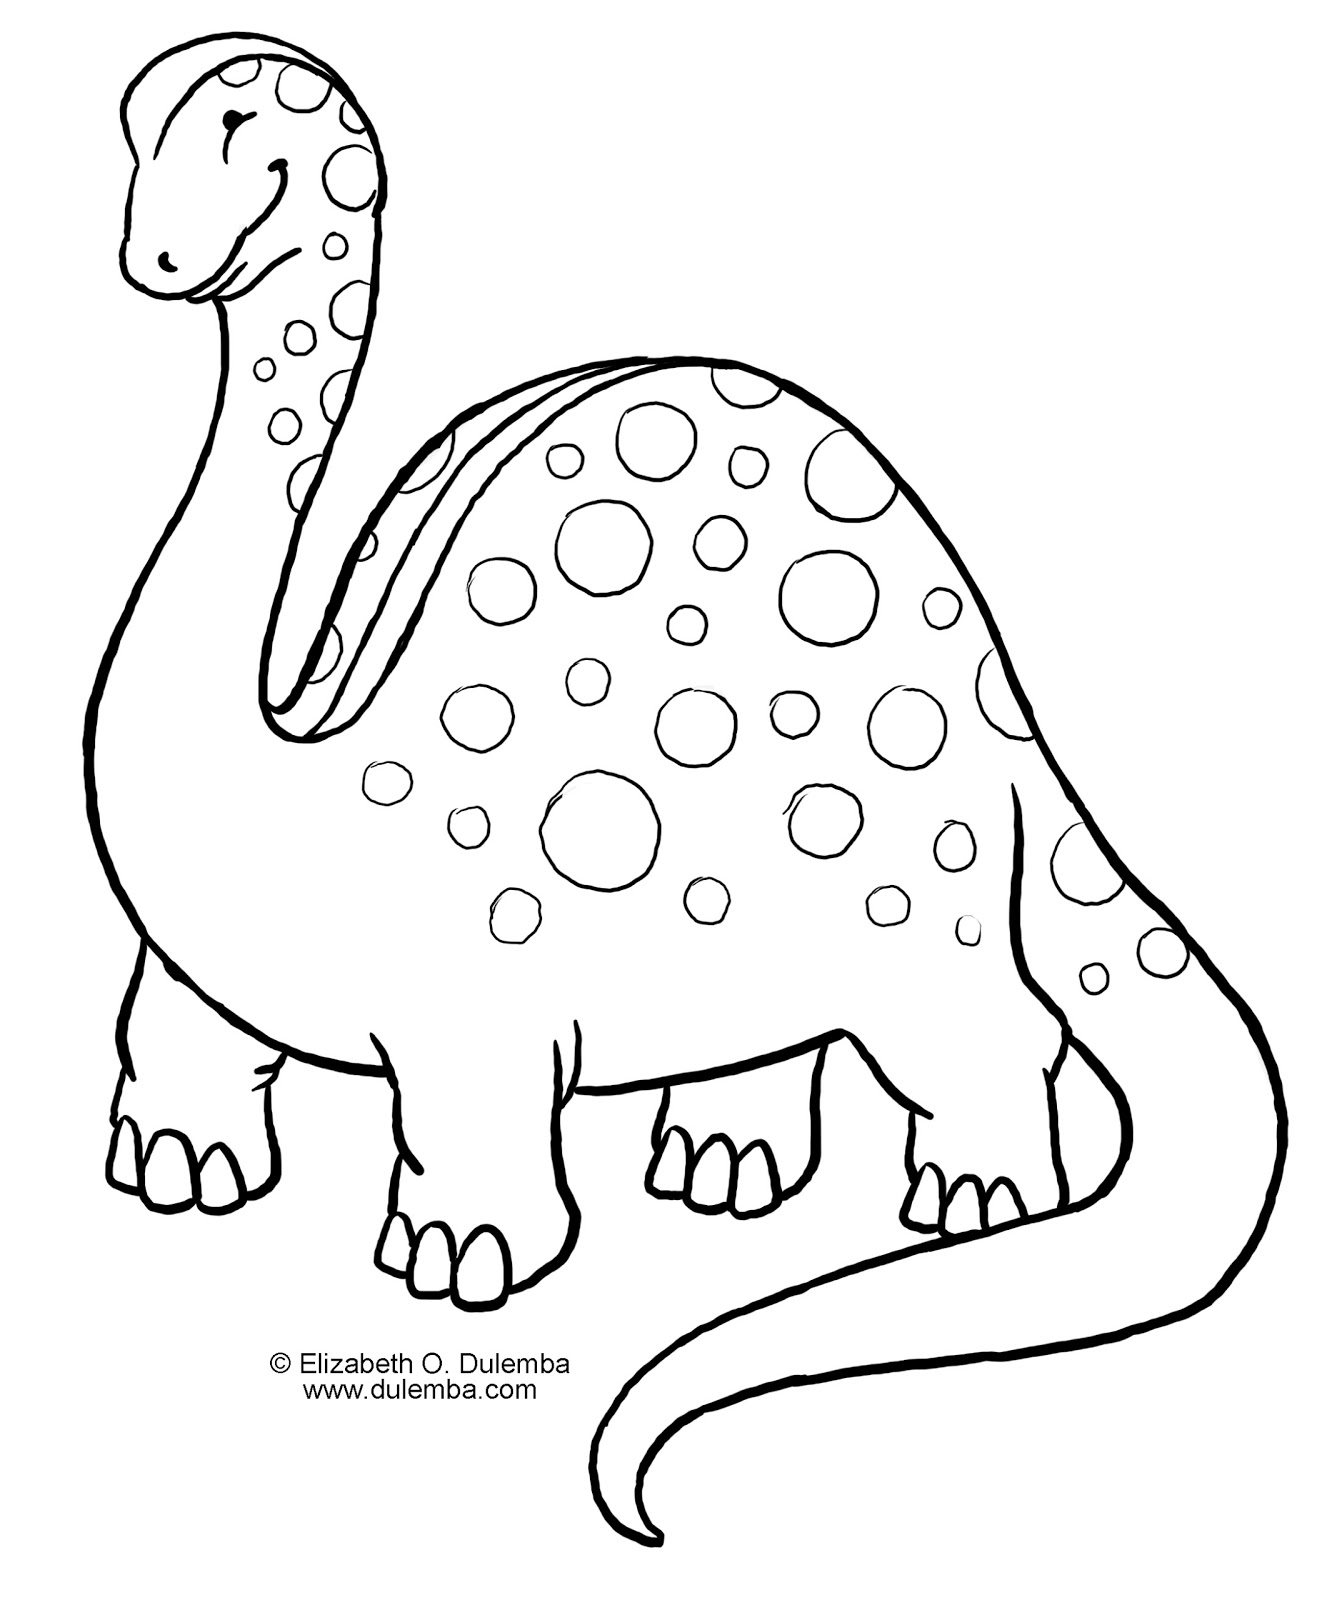 print dinosaur coloring pages cute little dinosaur coloring page free printable pages coloring dinosaur print 